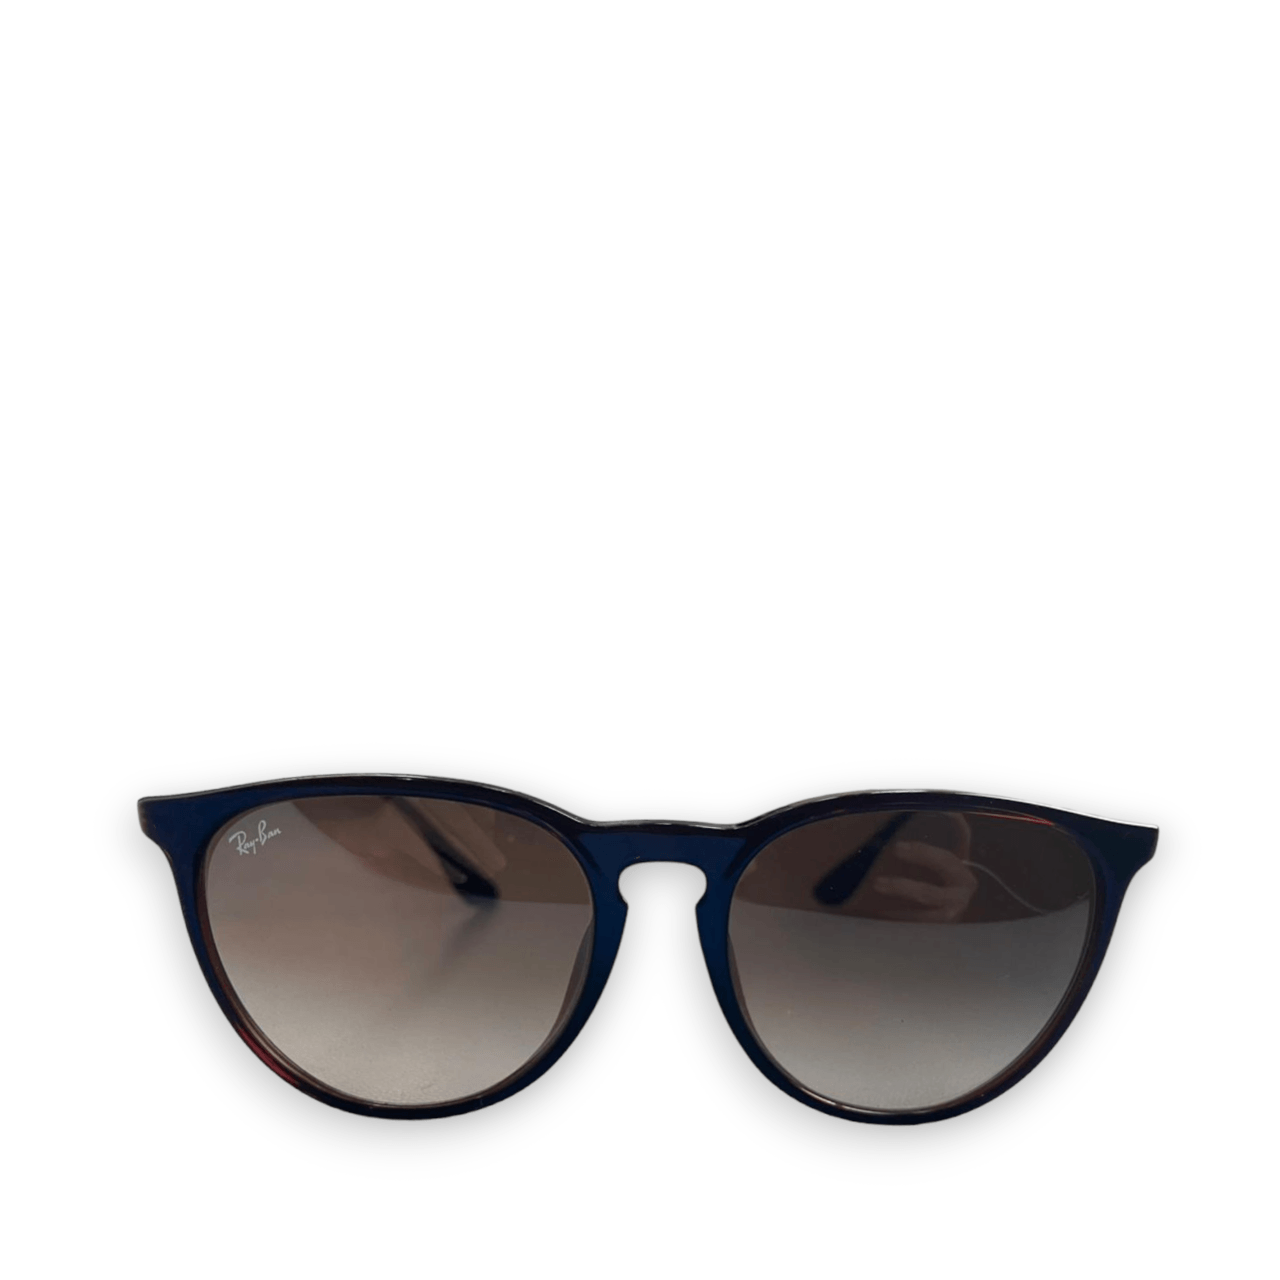 Ray-ban Wayfarer Sunglasses